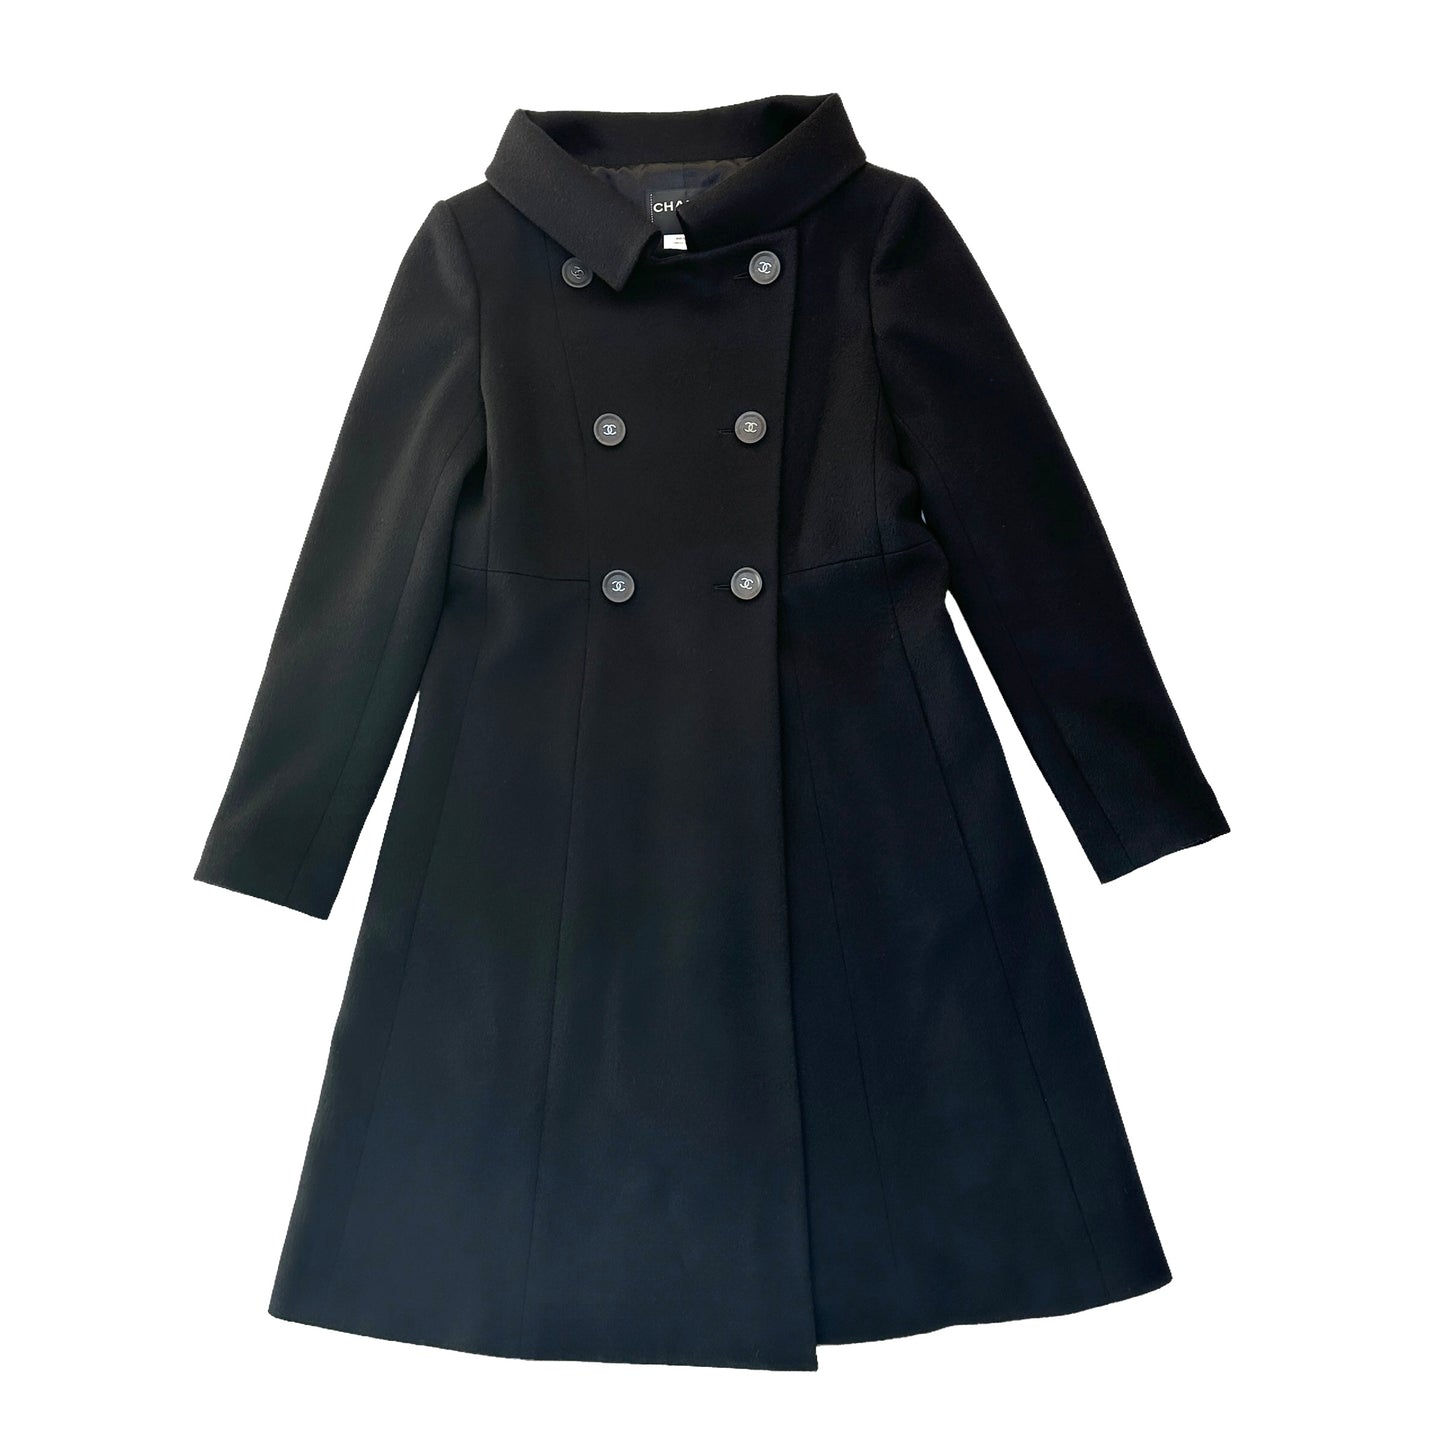 Black Wool Long Coat - M